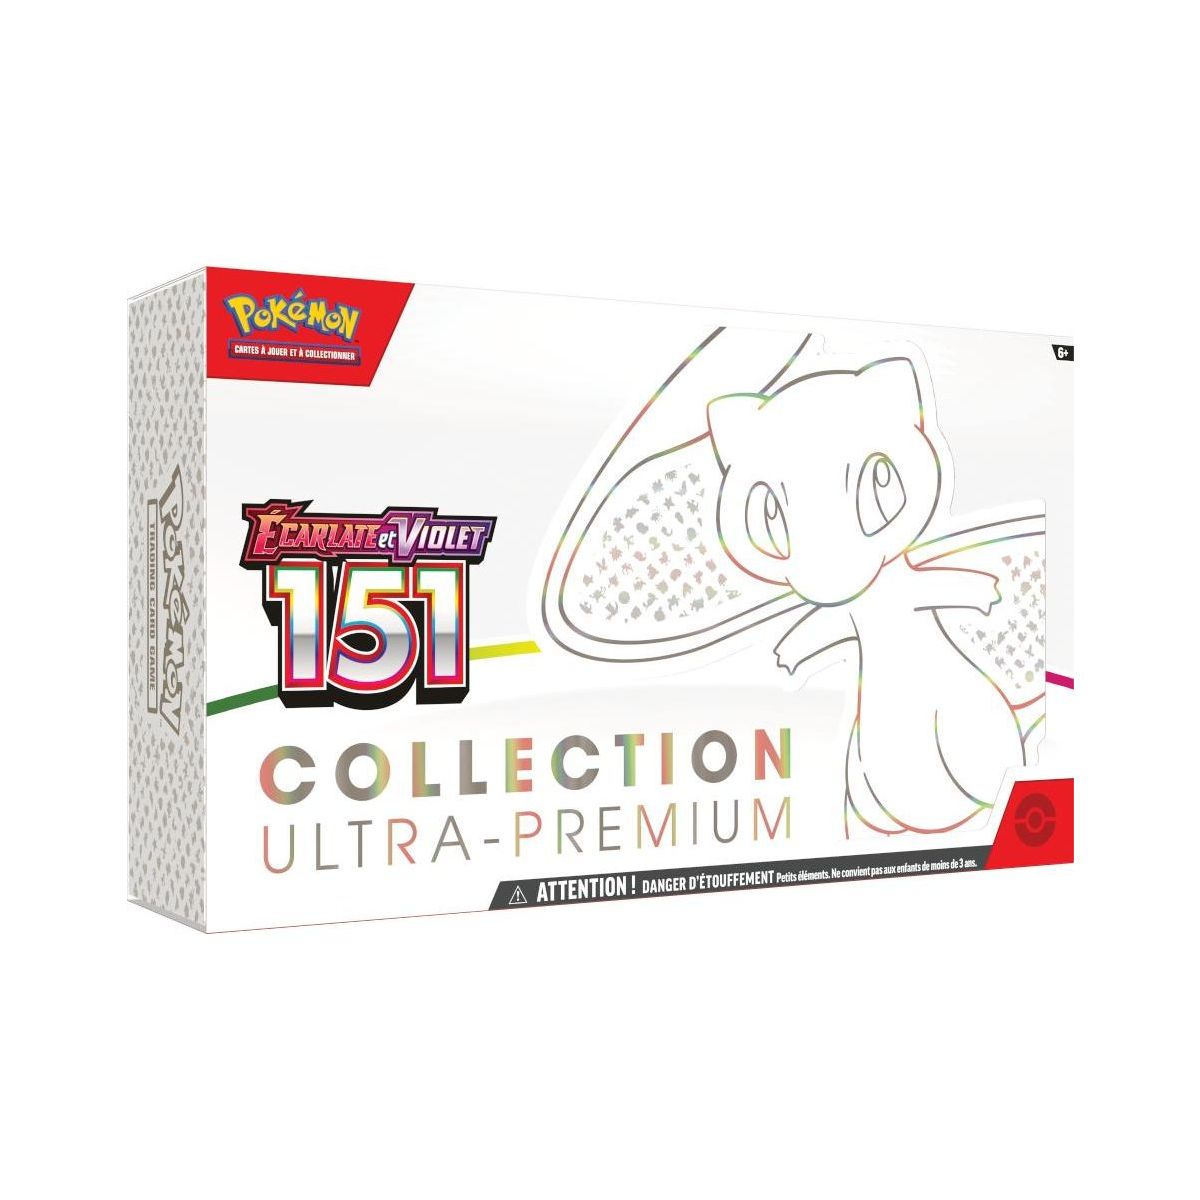 Pokémon - Ultra Premium Collection Box - Scarlet and Purple - 151 -[SV03.5 - EV03.5] - FR